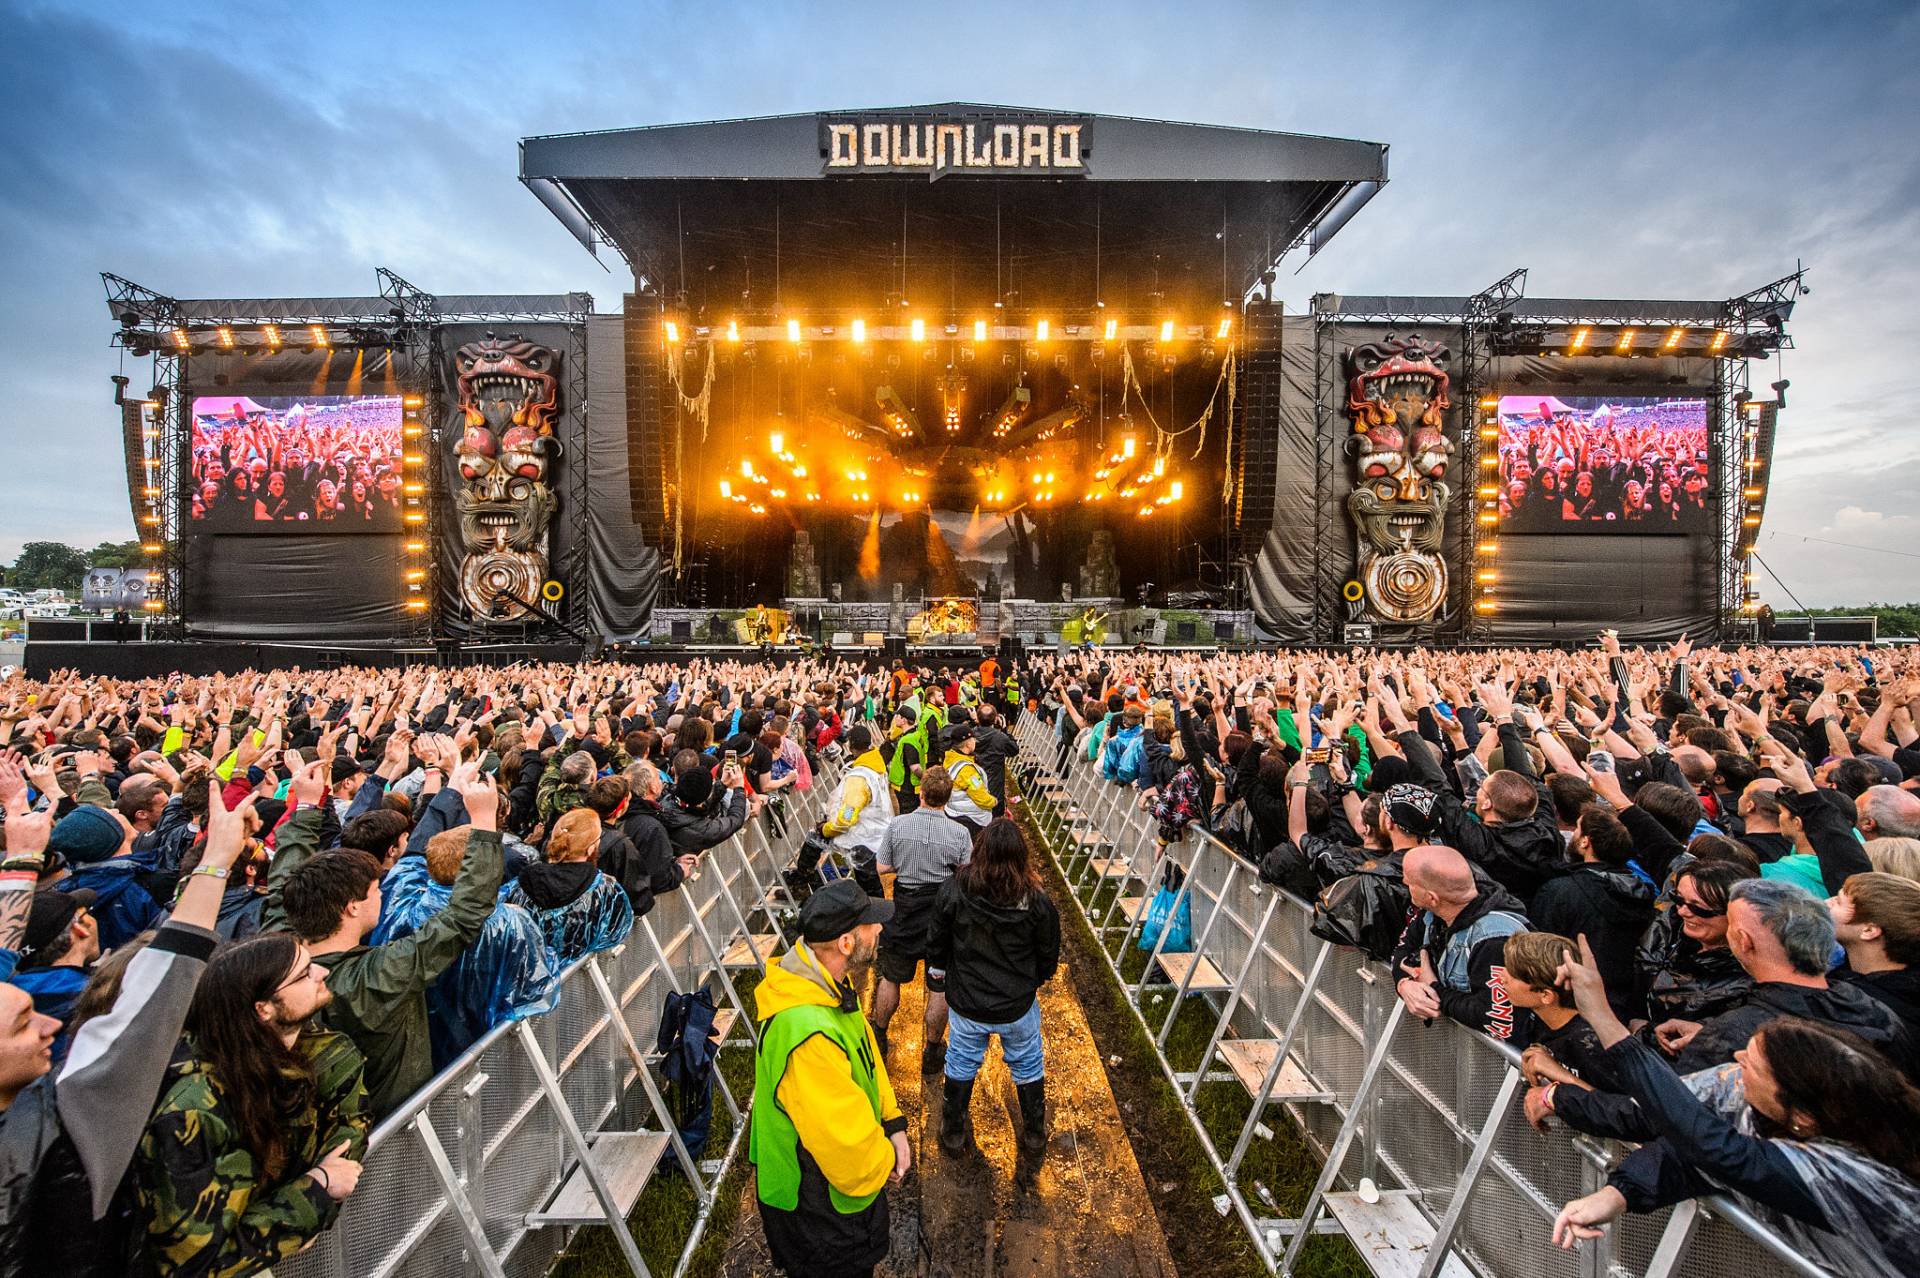 Iron Maiden @ Download Festival 2016. Photo: Matt Eachus